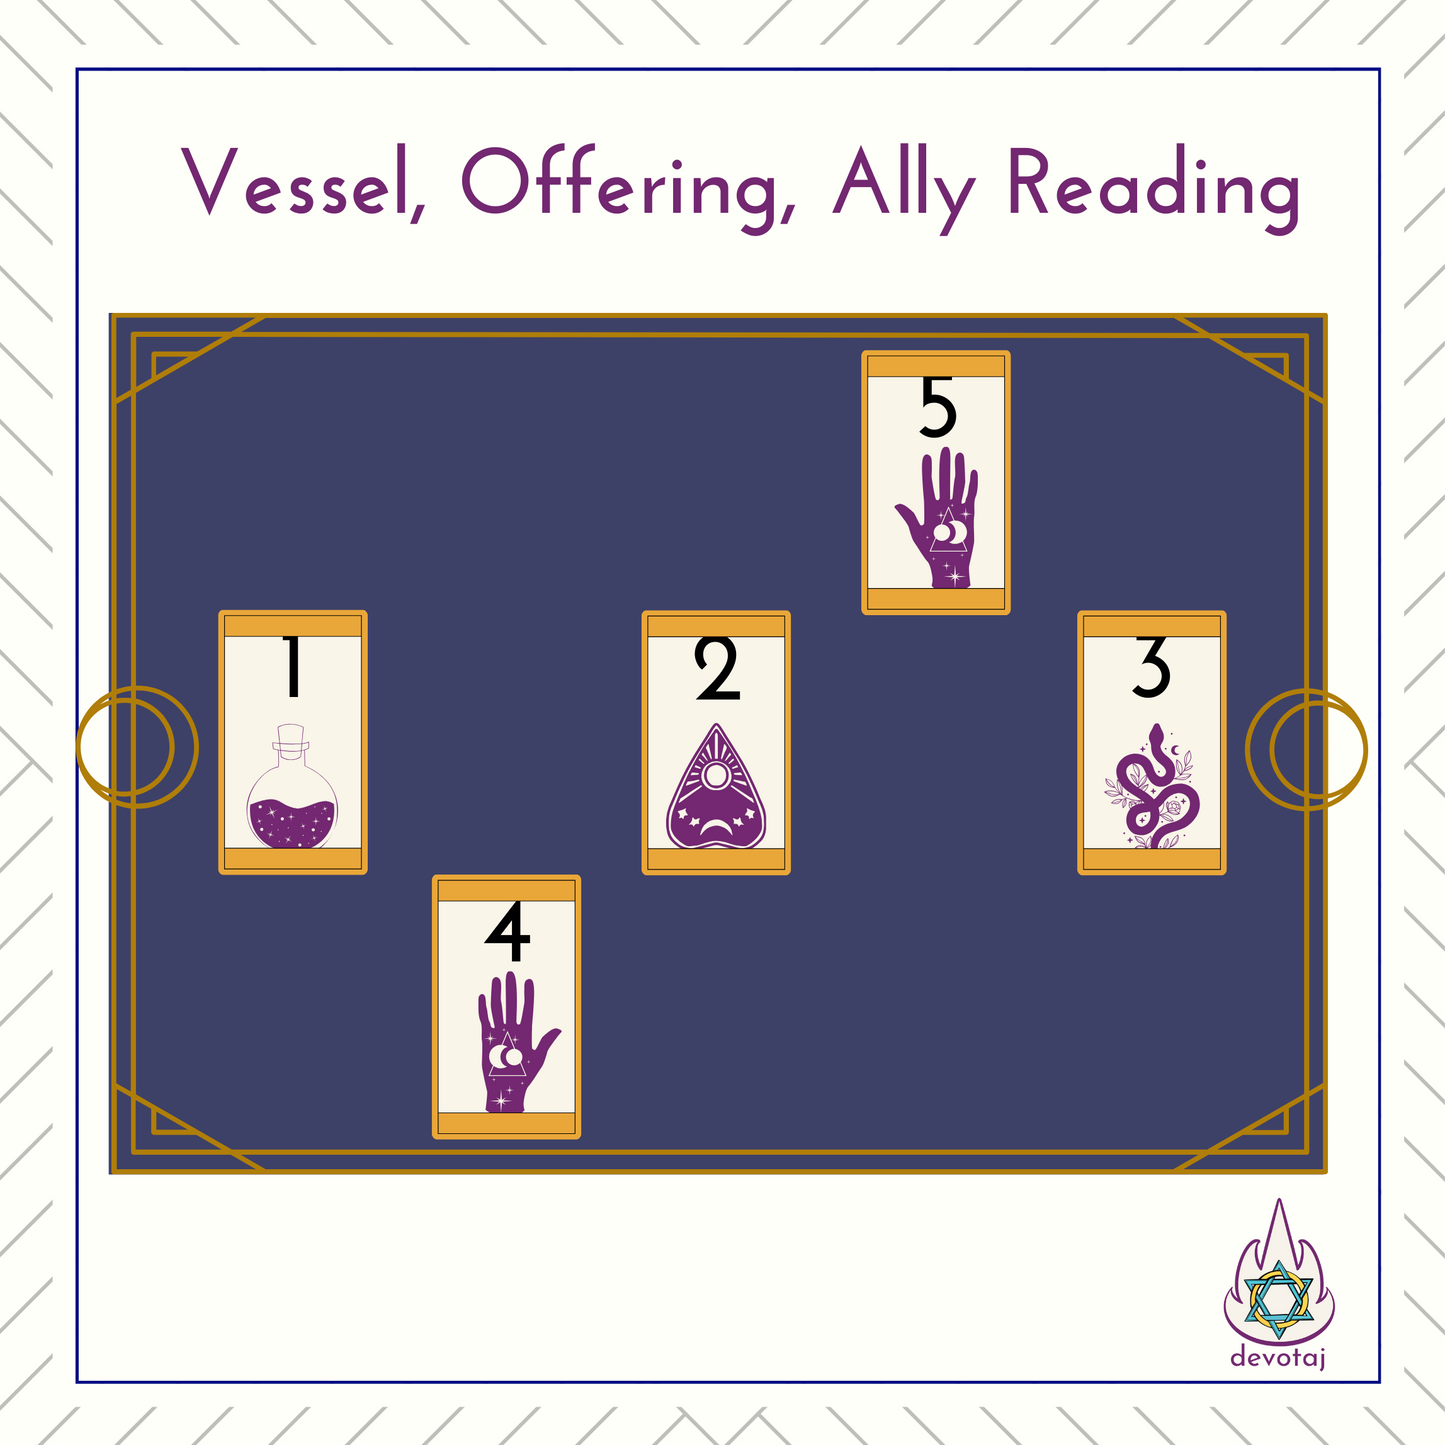 Reading: Vessel, Offering, Ally